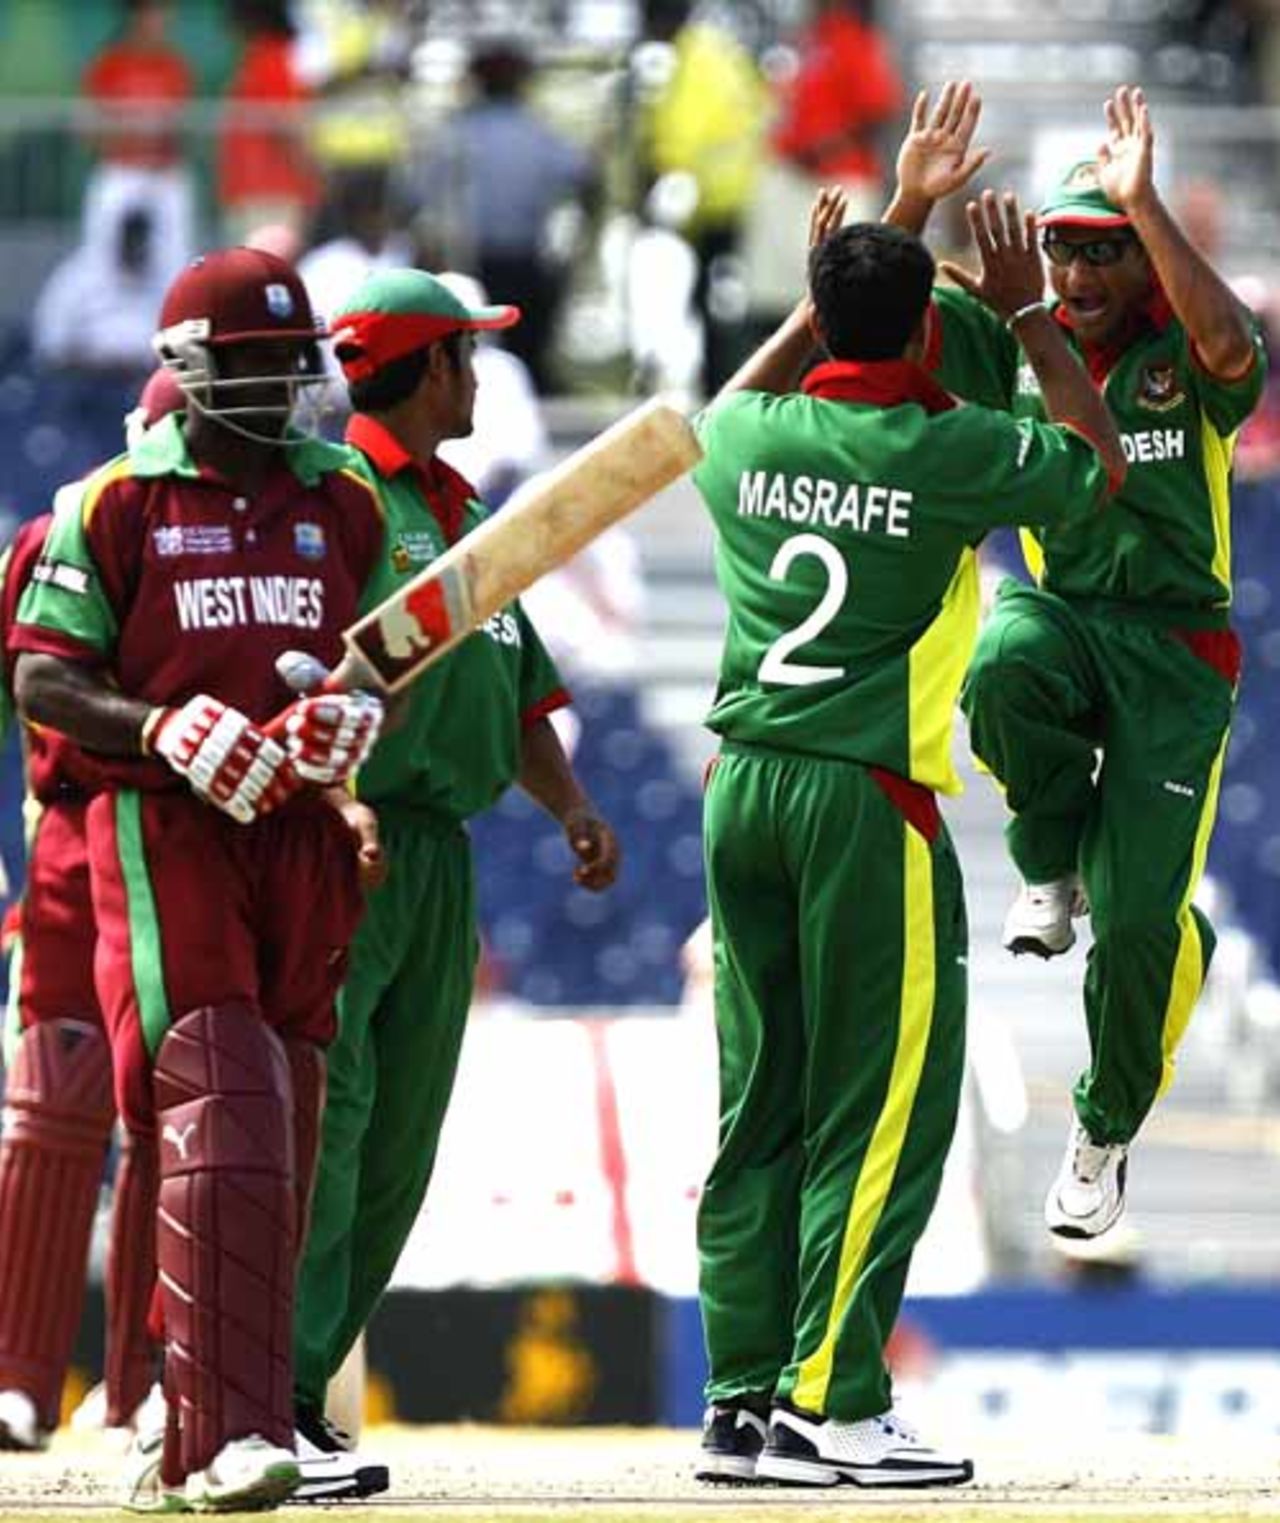 Devon Smith was bowled first up by Mashrafe Mortaza, West Indies v Bangladesh, Super Eights, Barbados, April 19, 2007